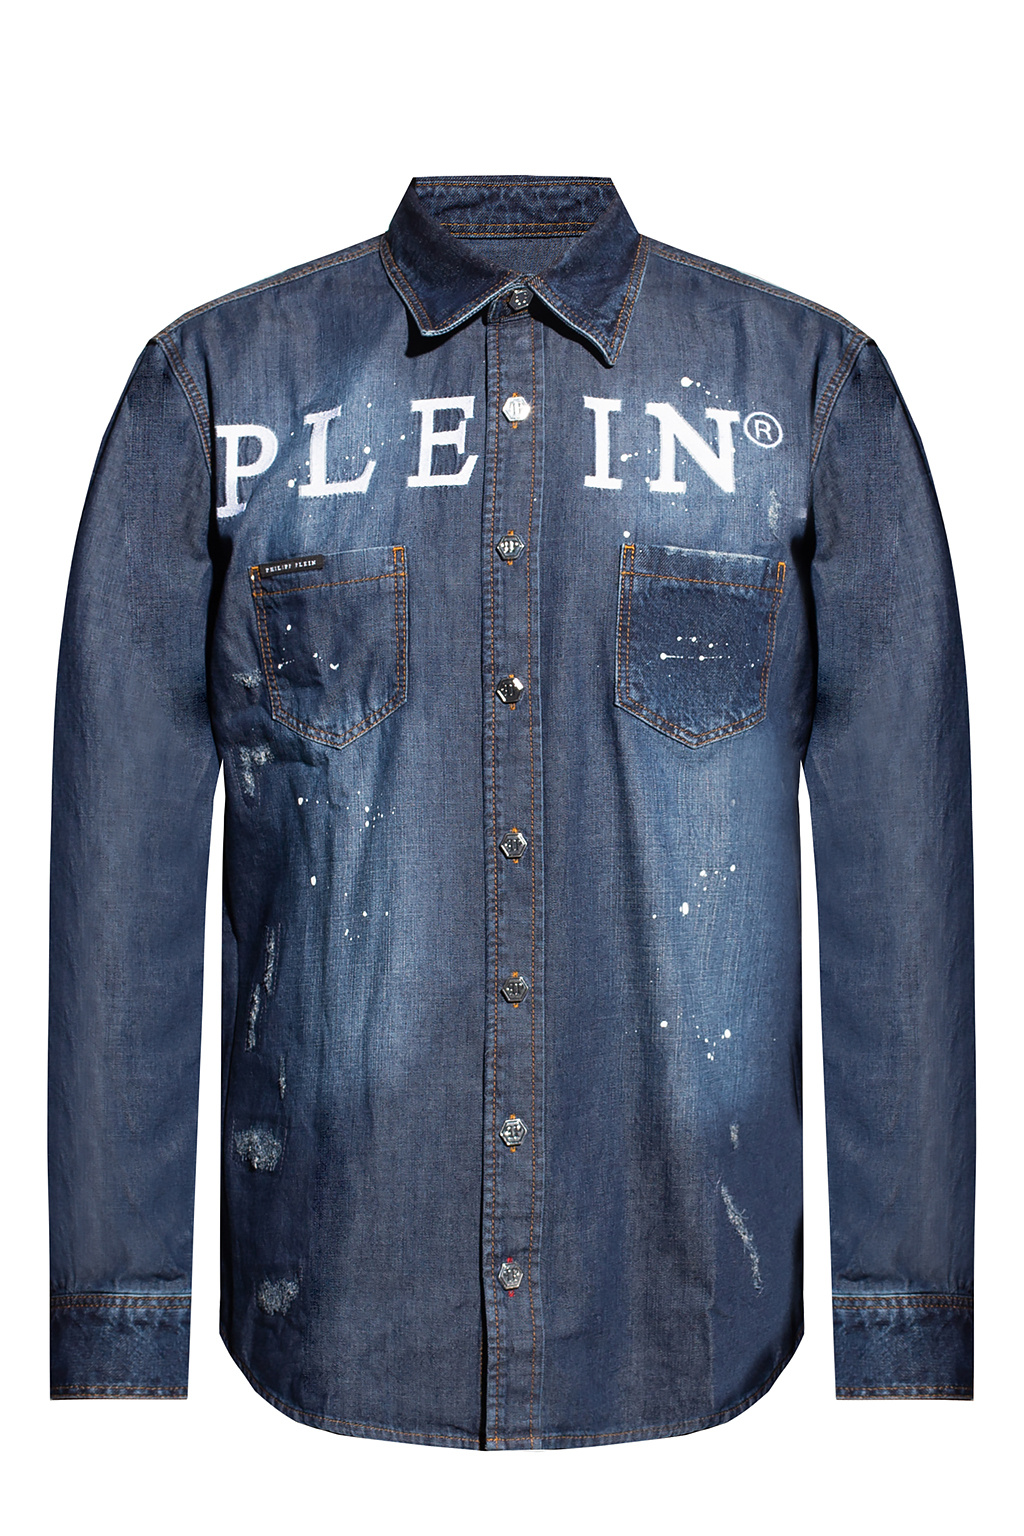 Philipp Plein Denim shirt with logo | Men's Clothing | Vitkac